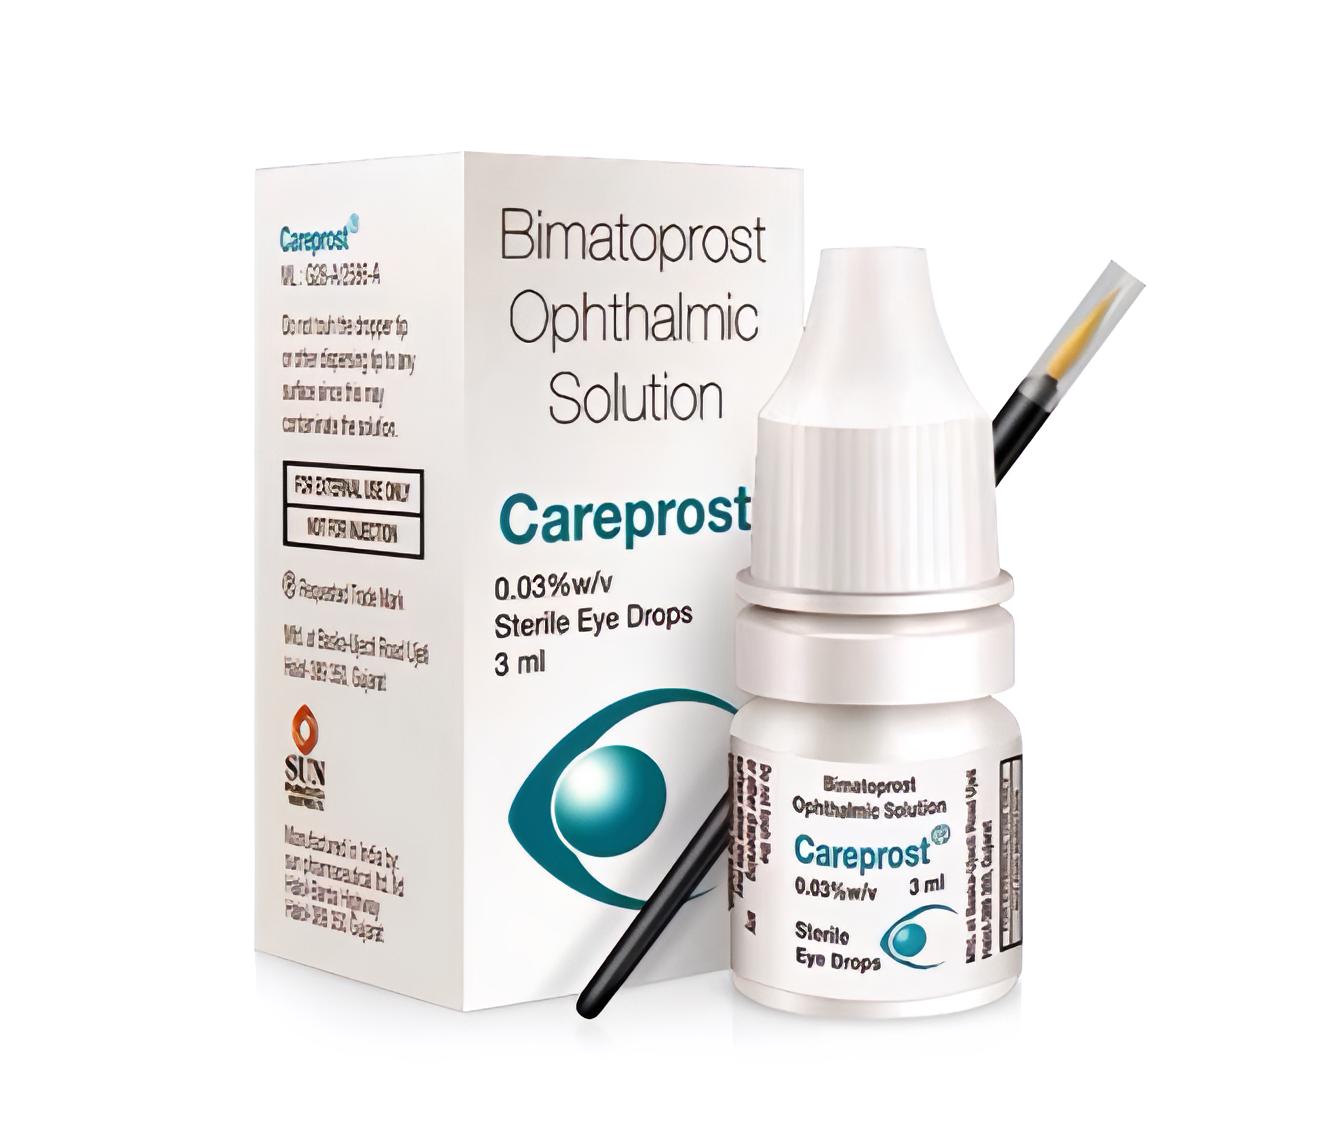 Buy Careprost 3 ml Online For $10 with Free Brush | Genericaura